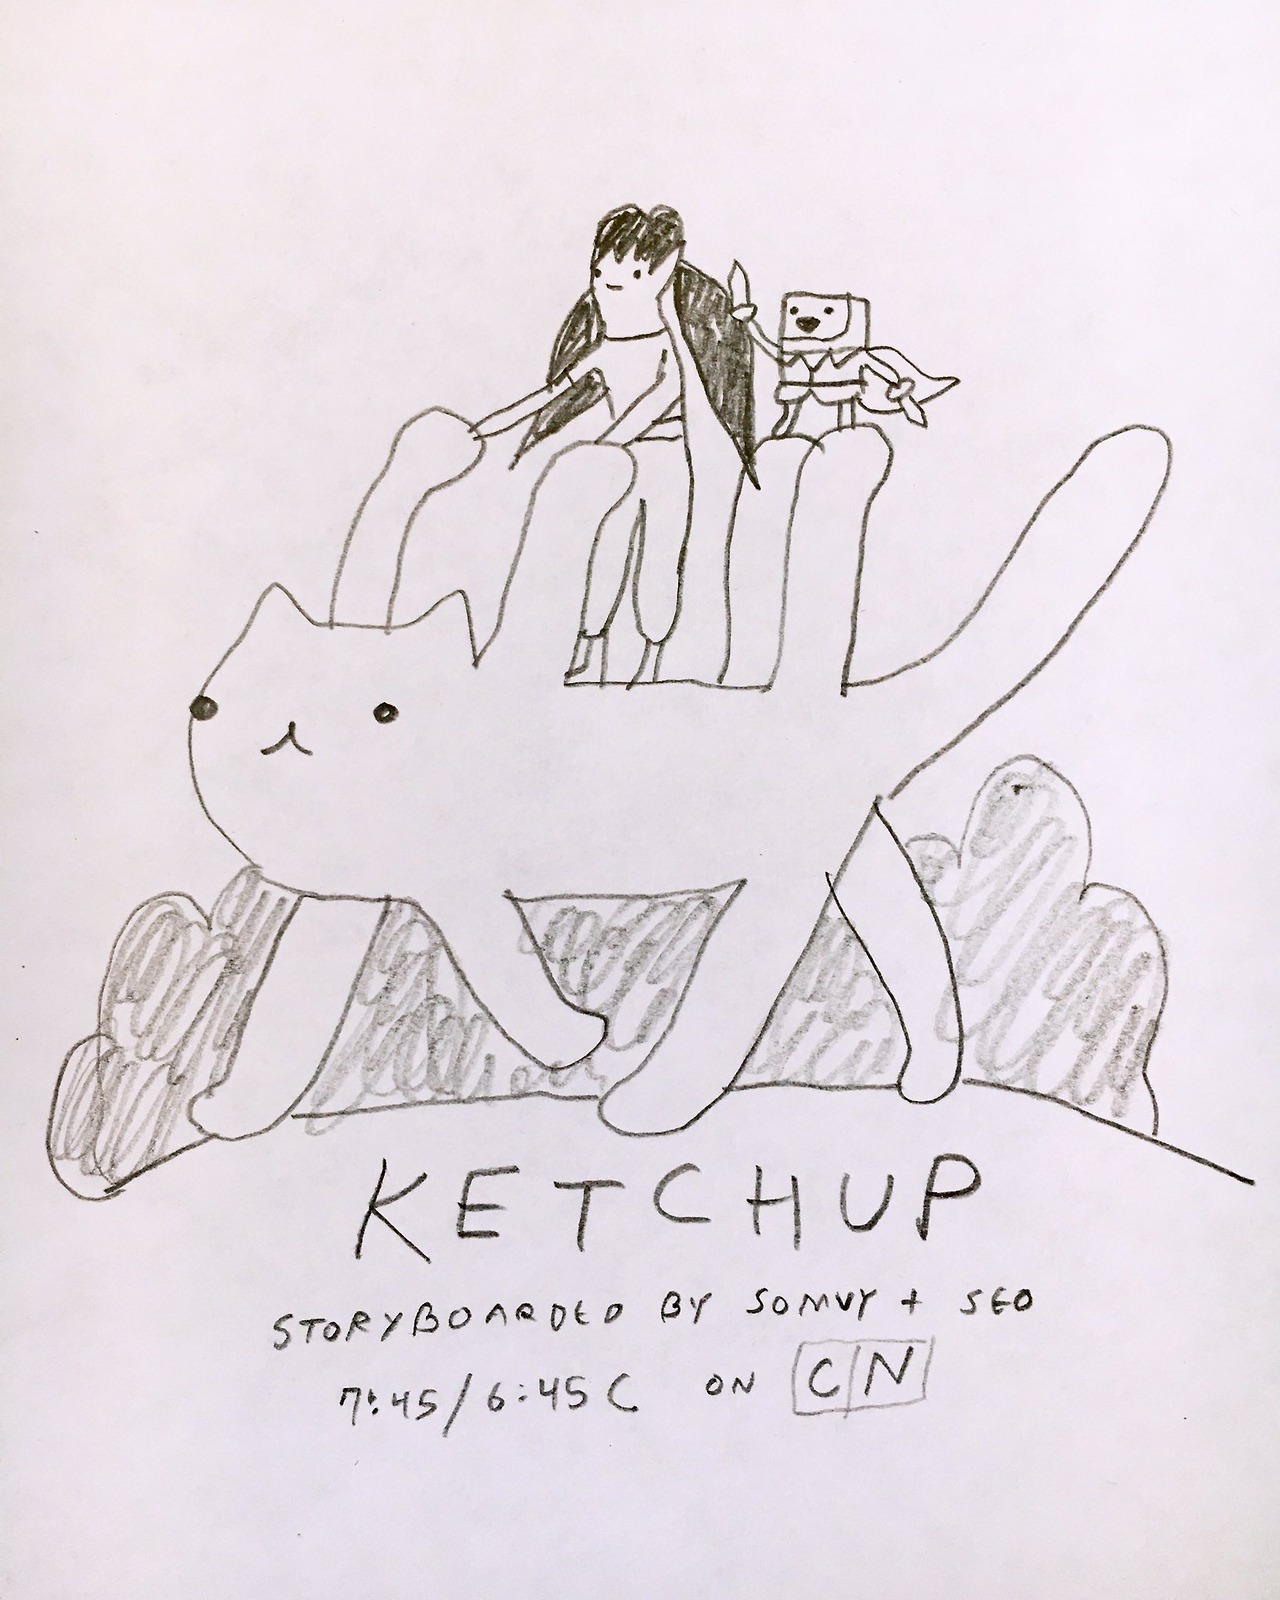 promo by writer/storyboard artist Seo KimKetchup premieres Tuesday, July 18th at